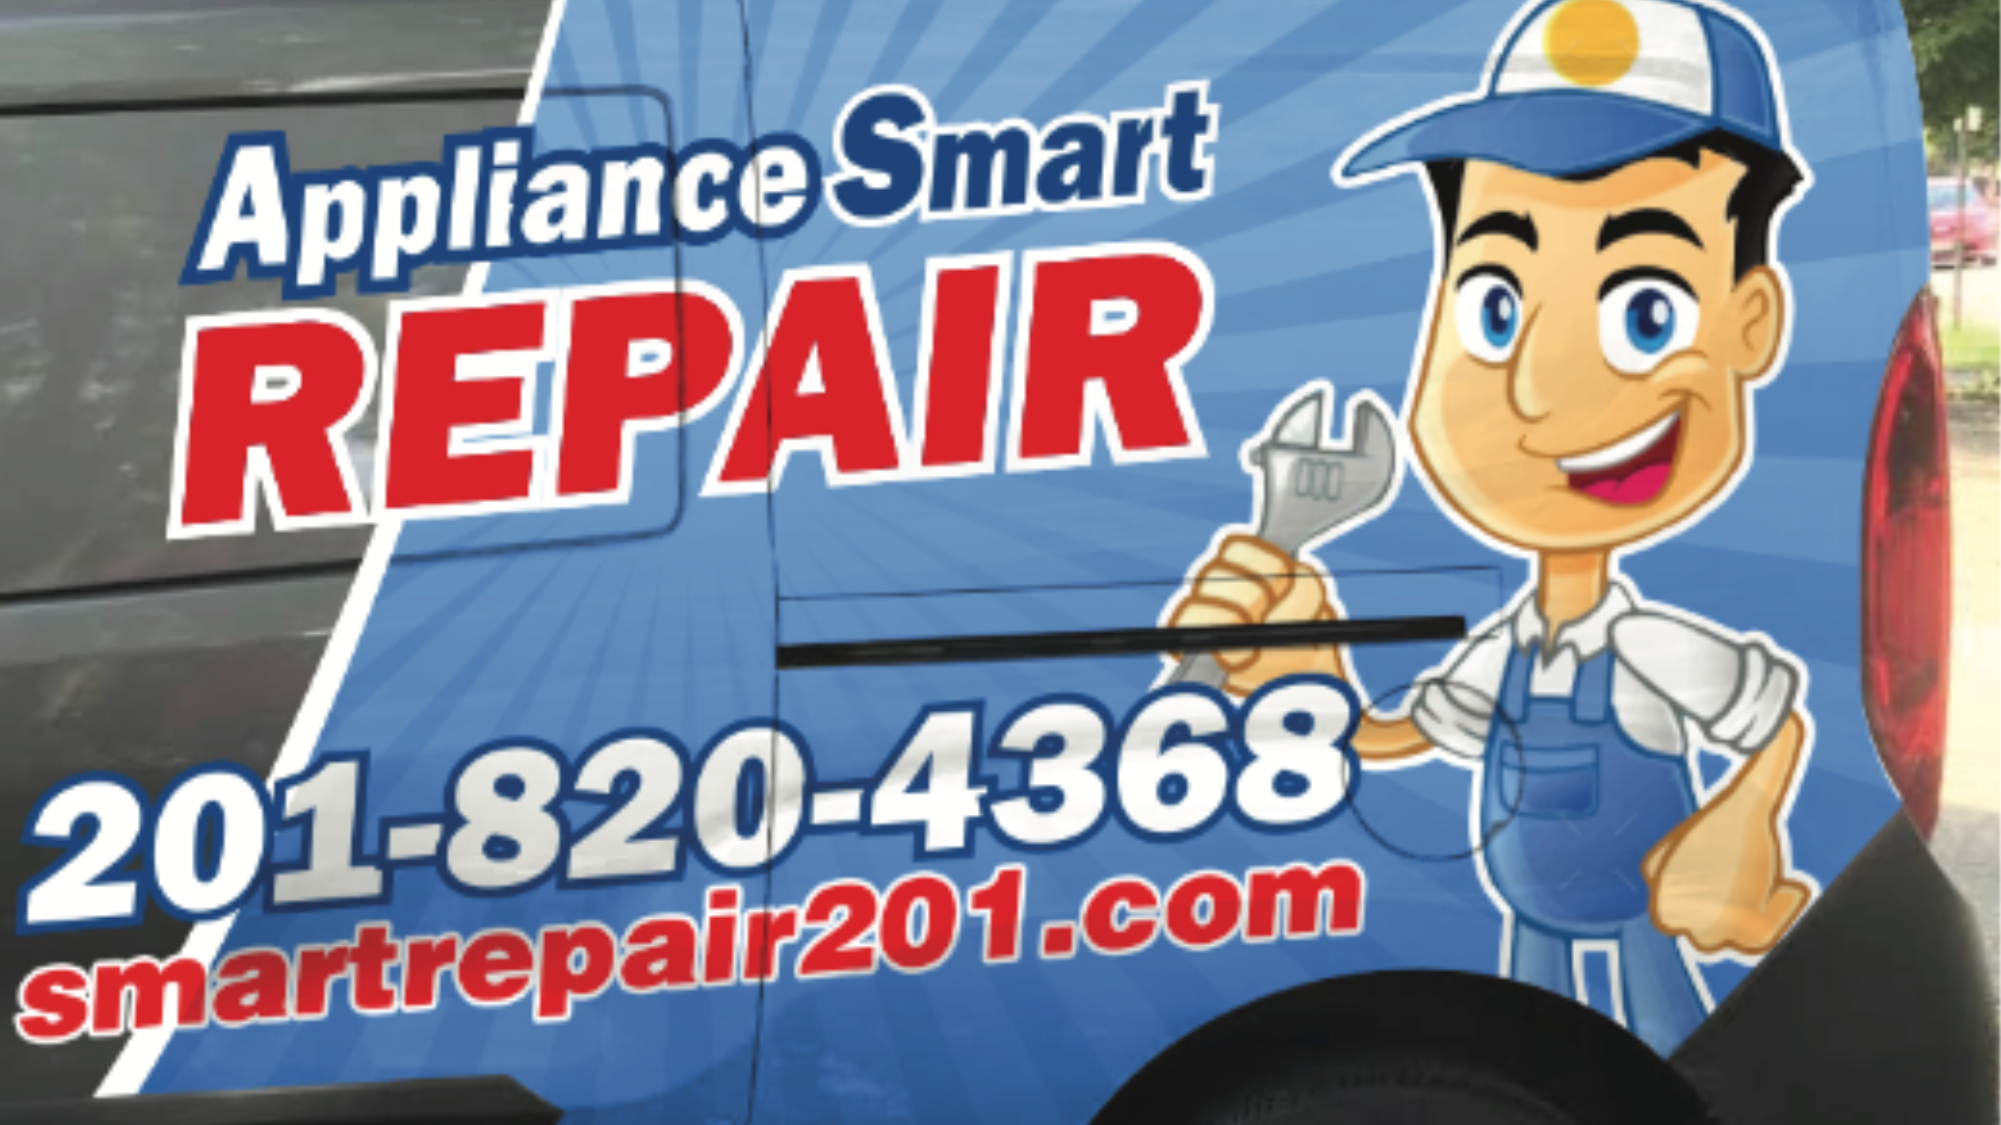 ApplianceSmart Repair Logo